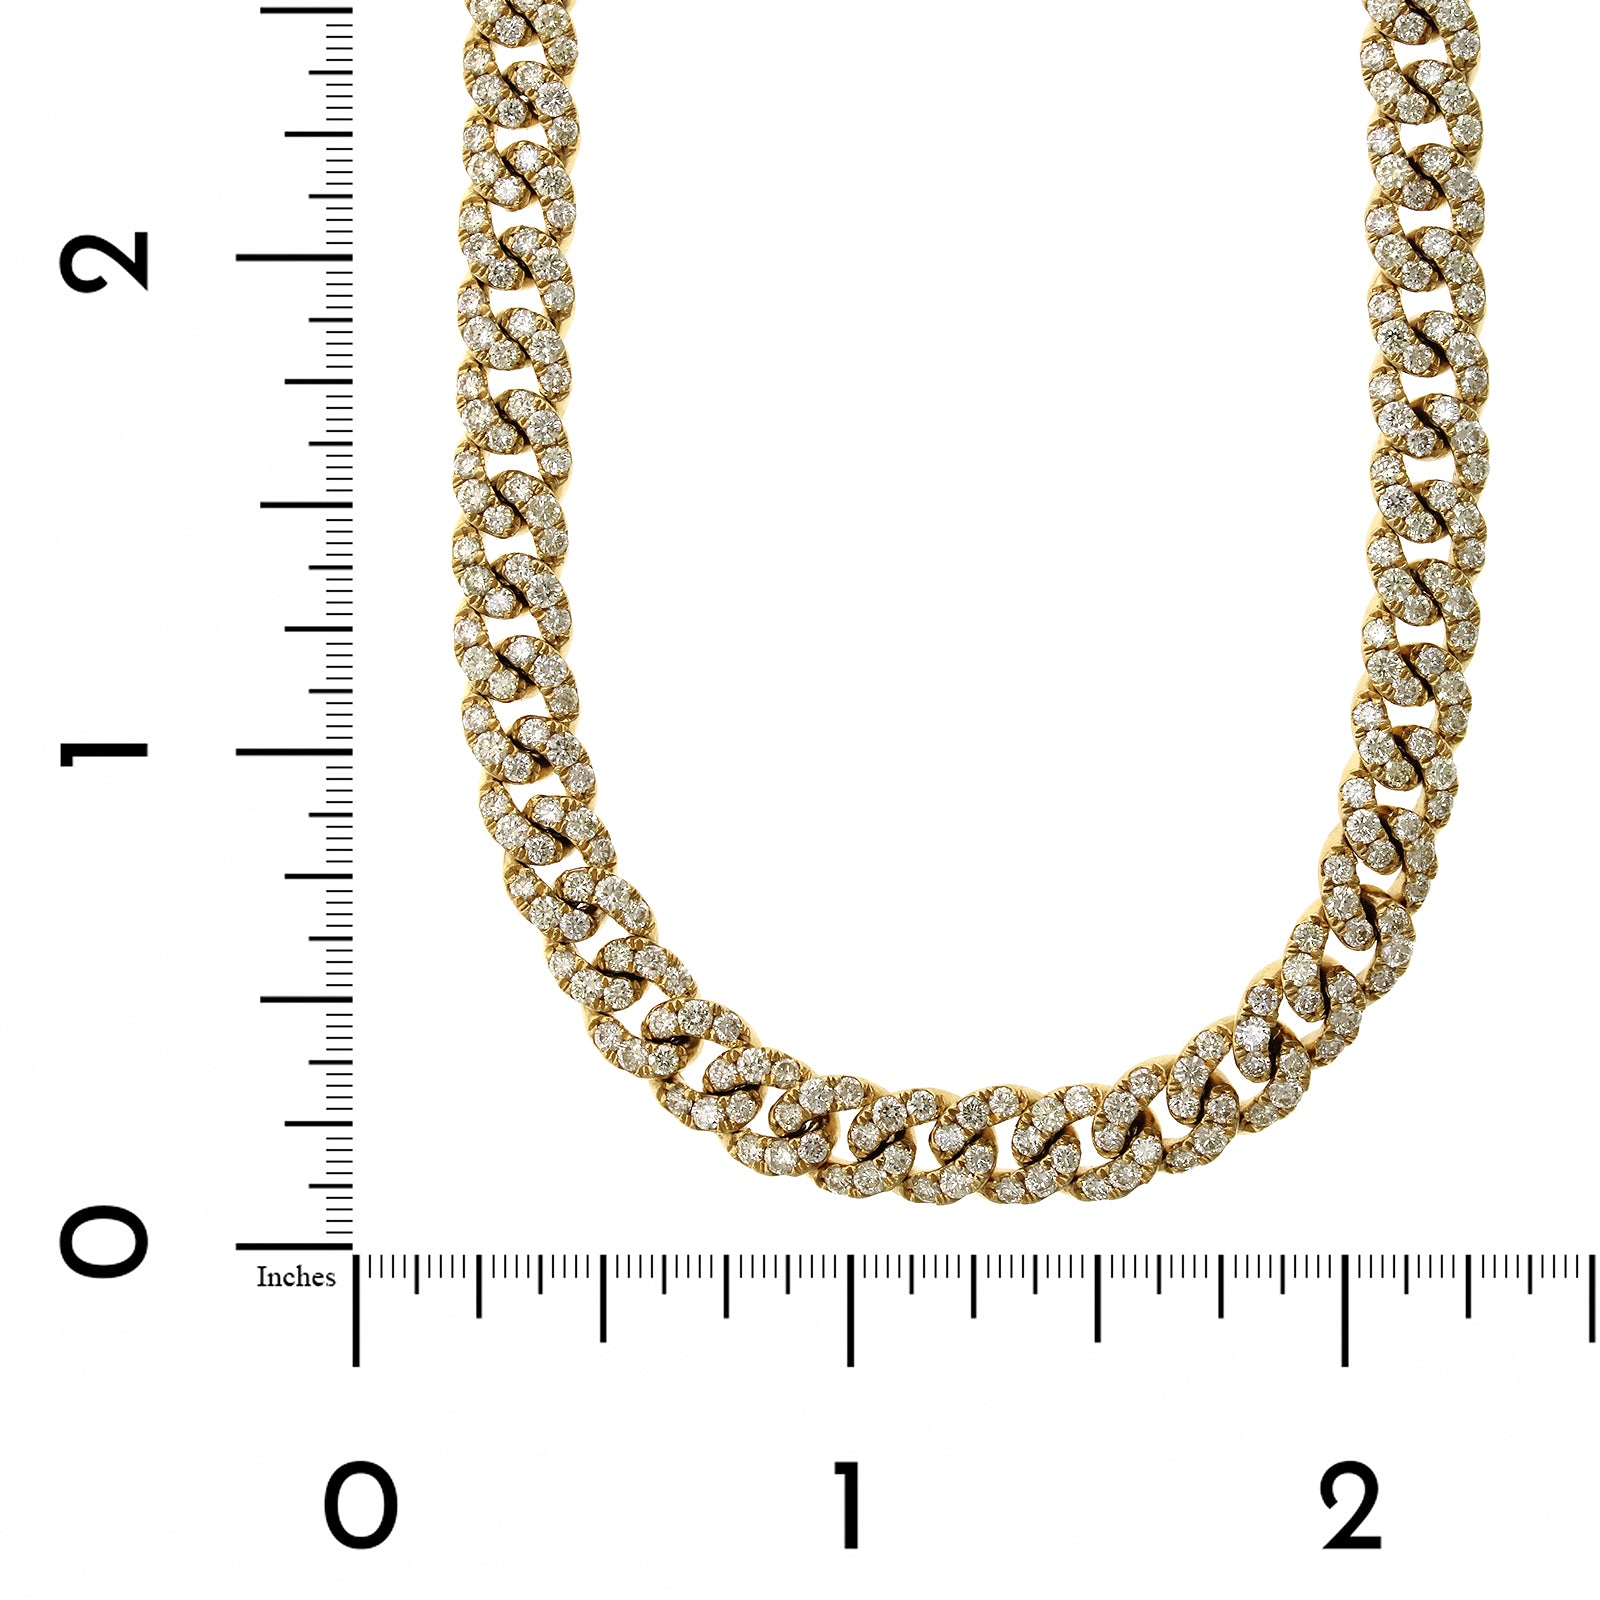 14K Yellow Gold Pavé Diamond Curb Chain